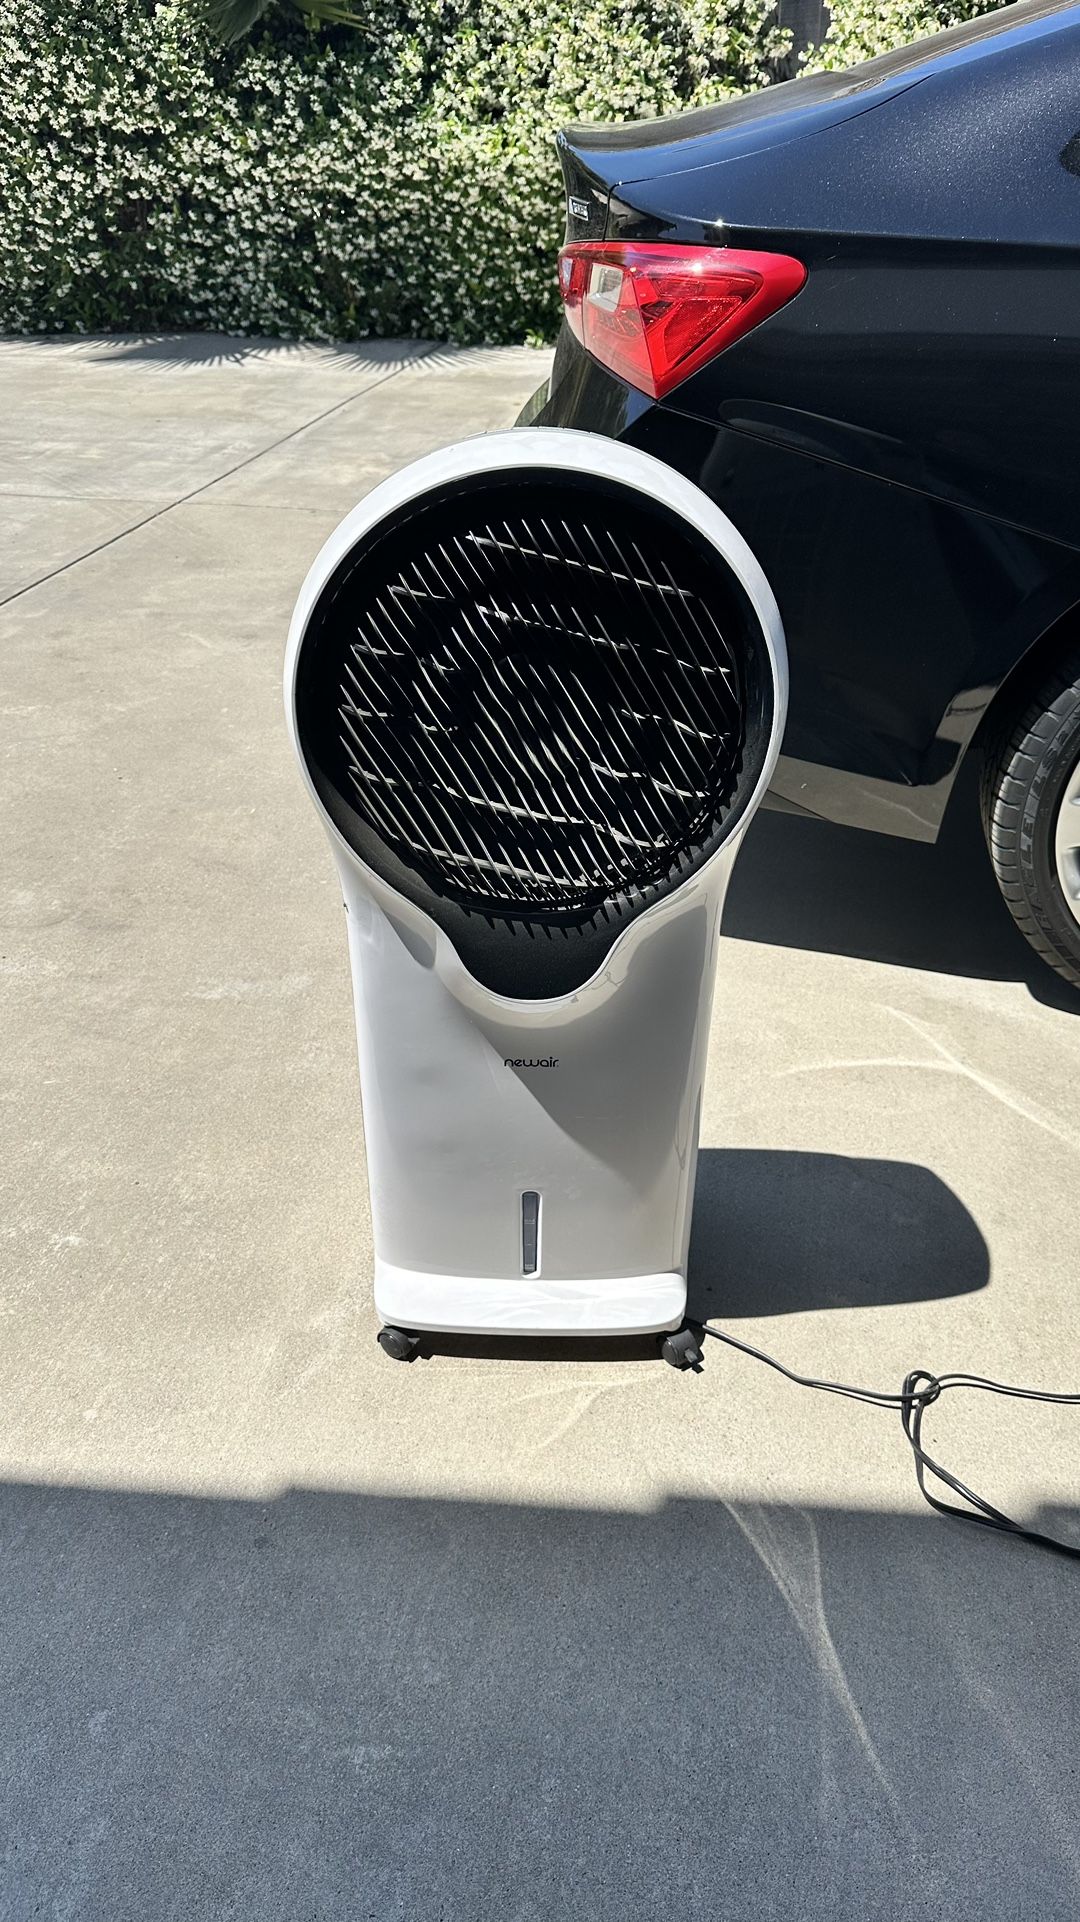 Portable Cooler/ Fan